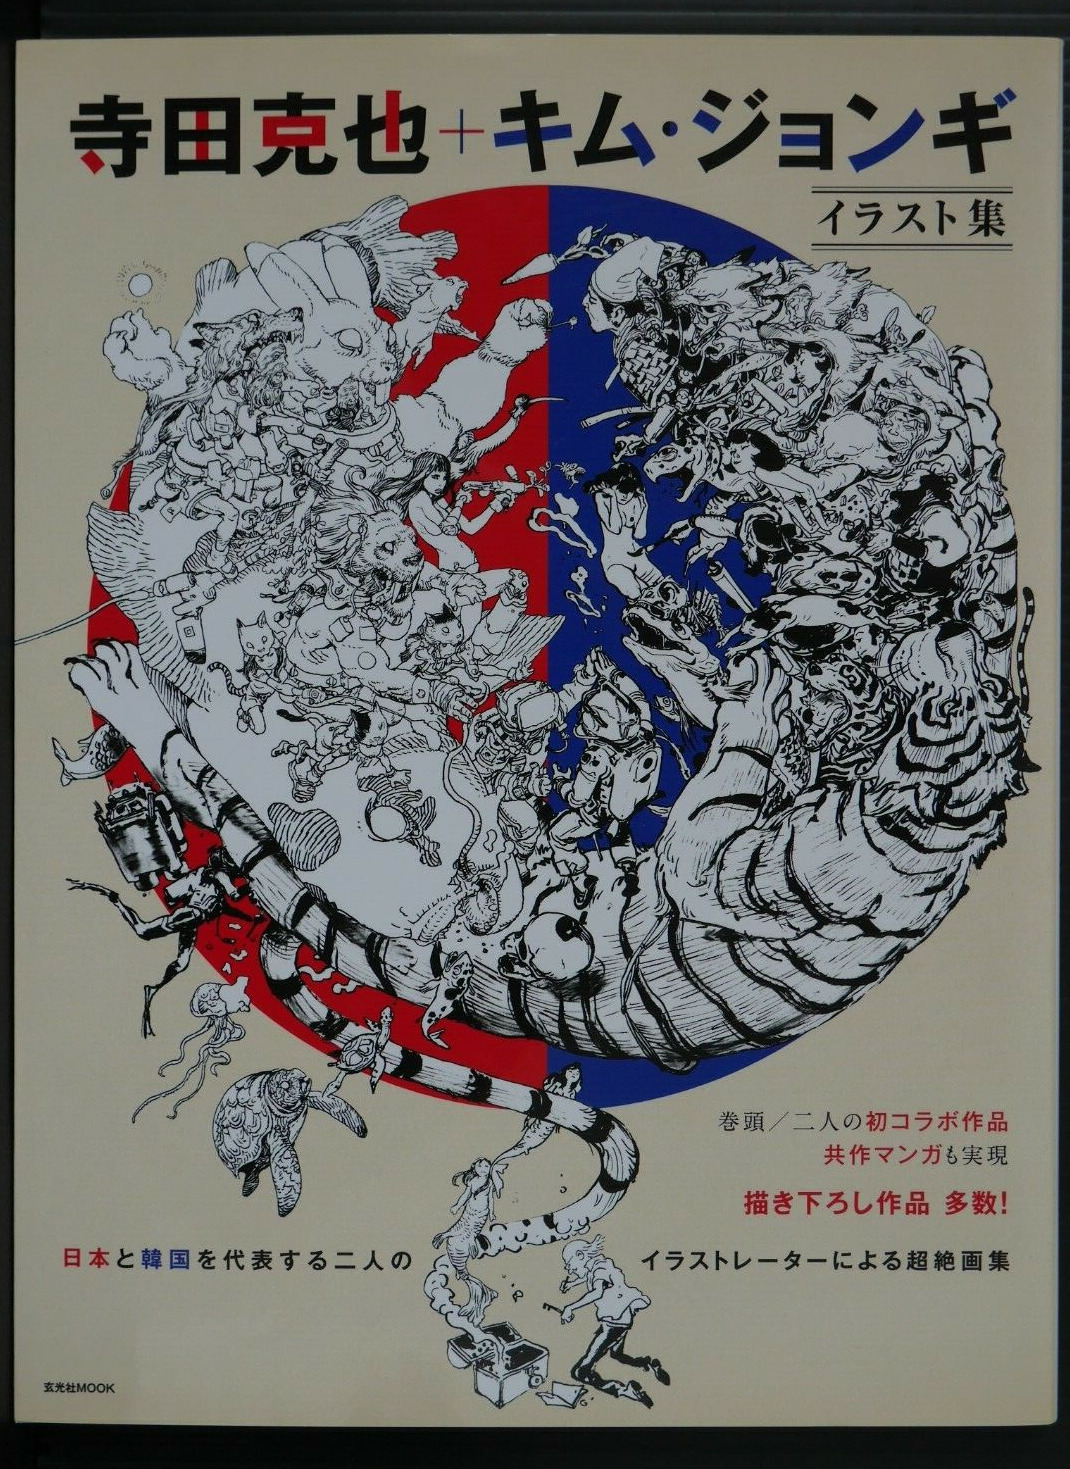 Katsuya Terada + Kim Jung Gi Illustrations (Collaboration Book), Japan